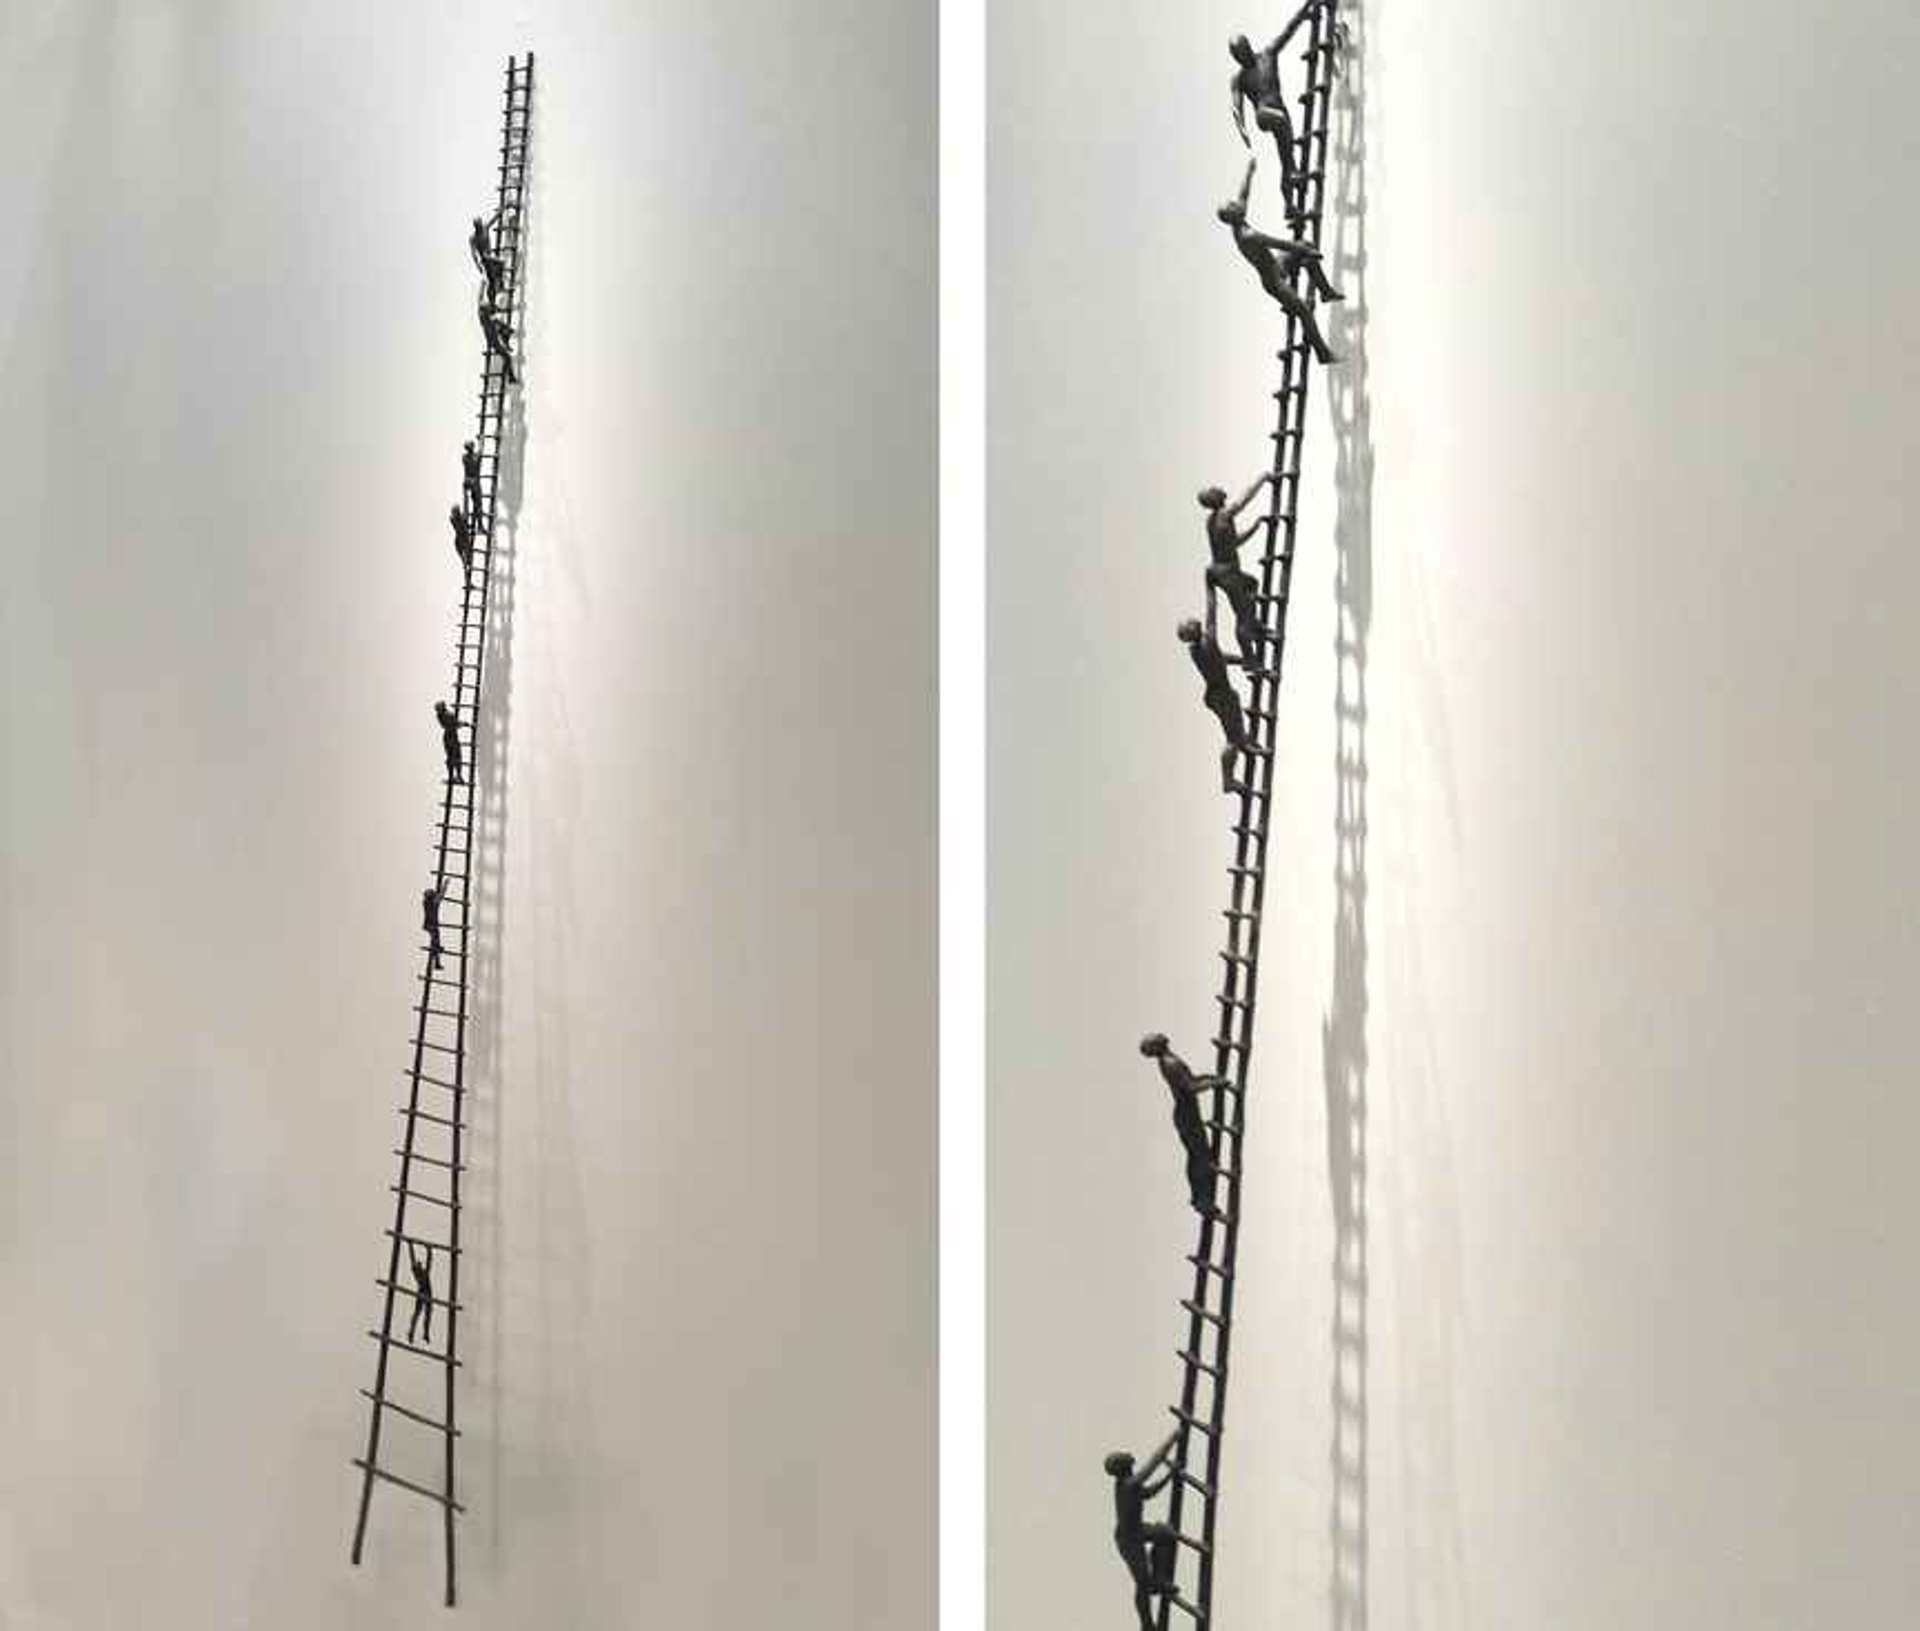 Ladder 7 by Bill Starke